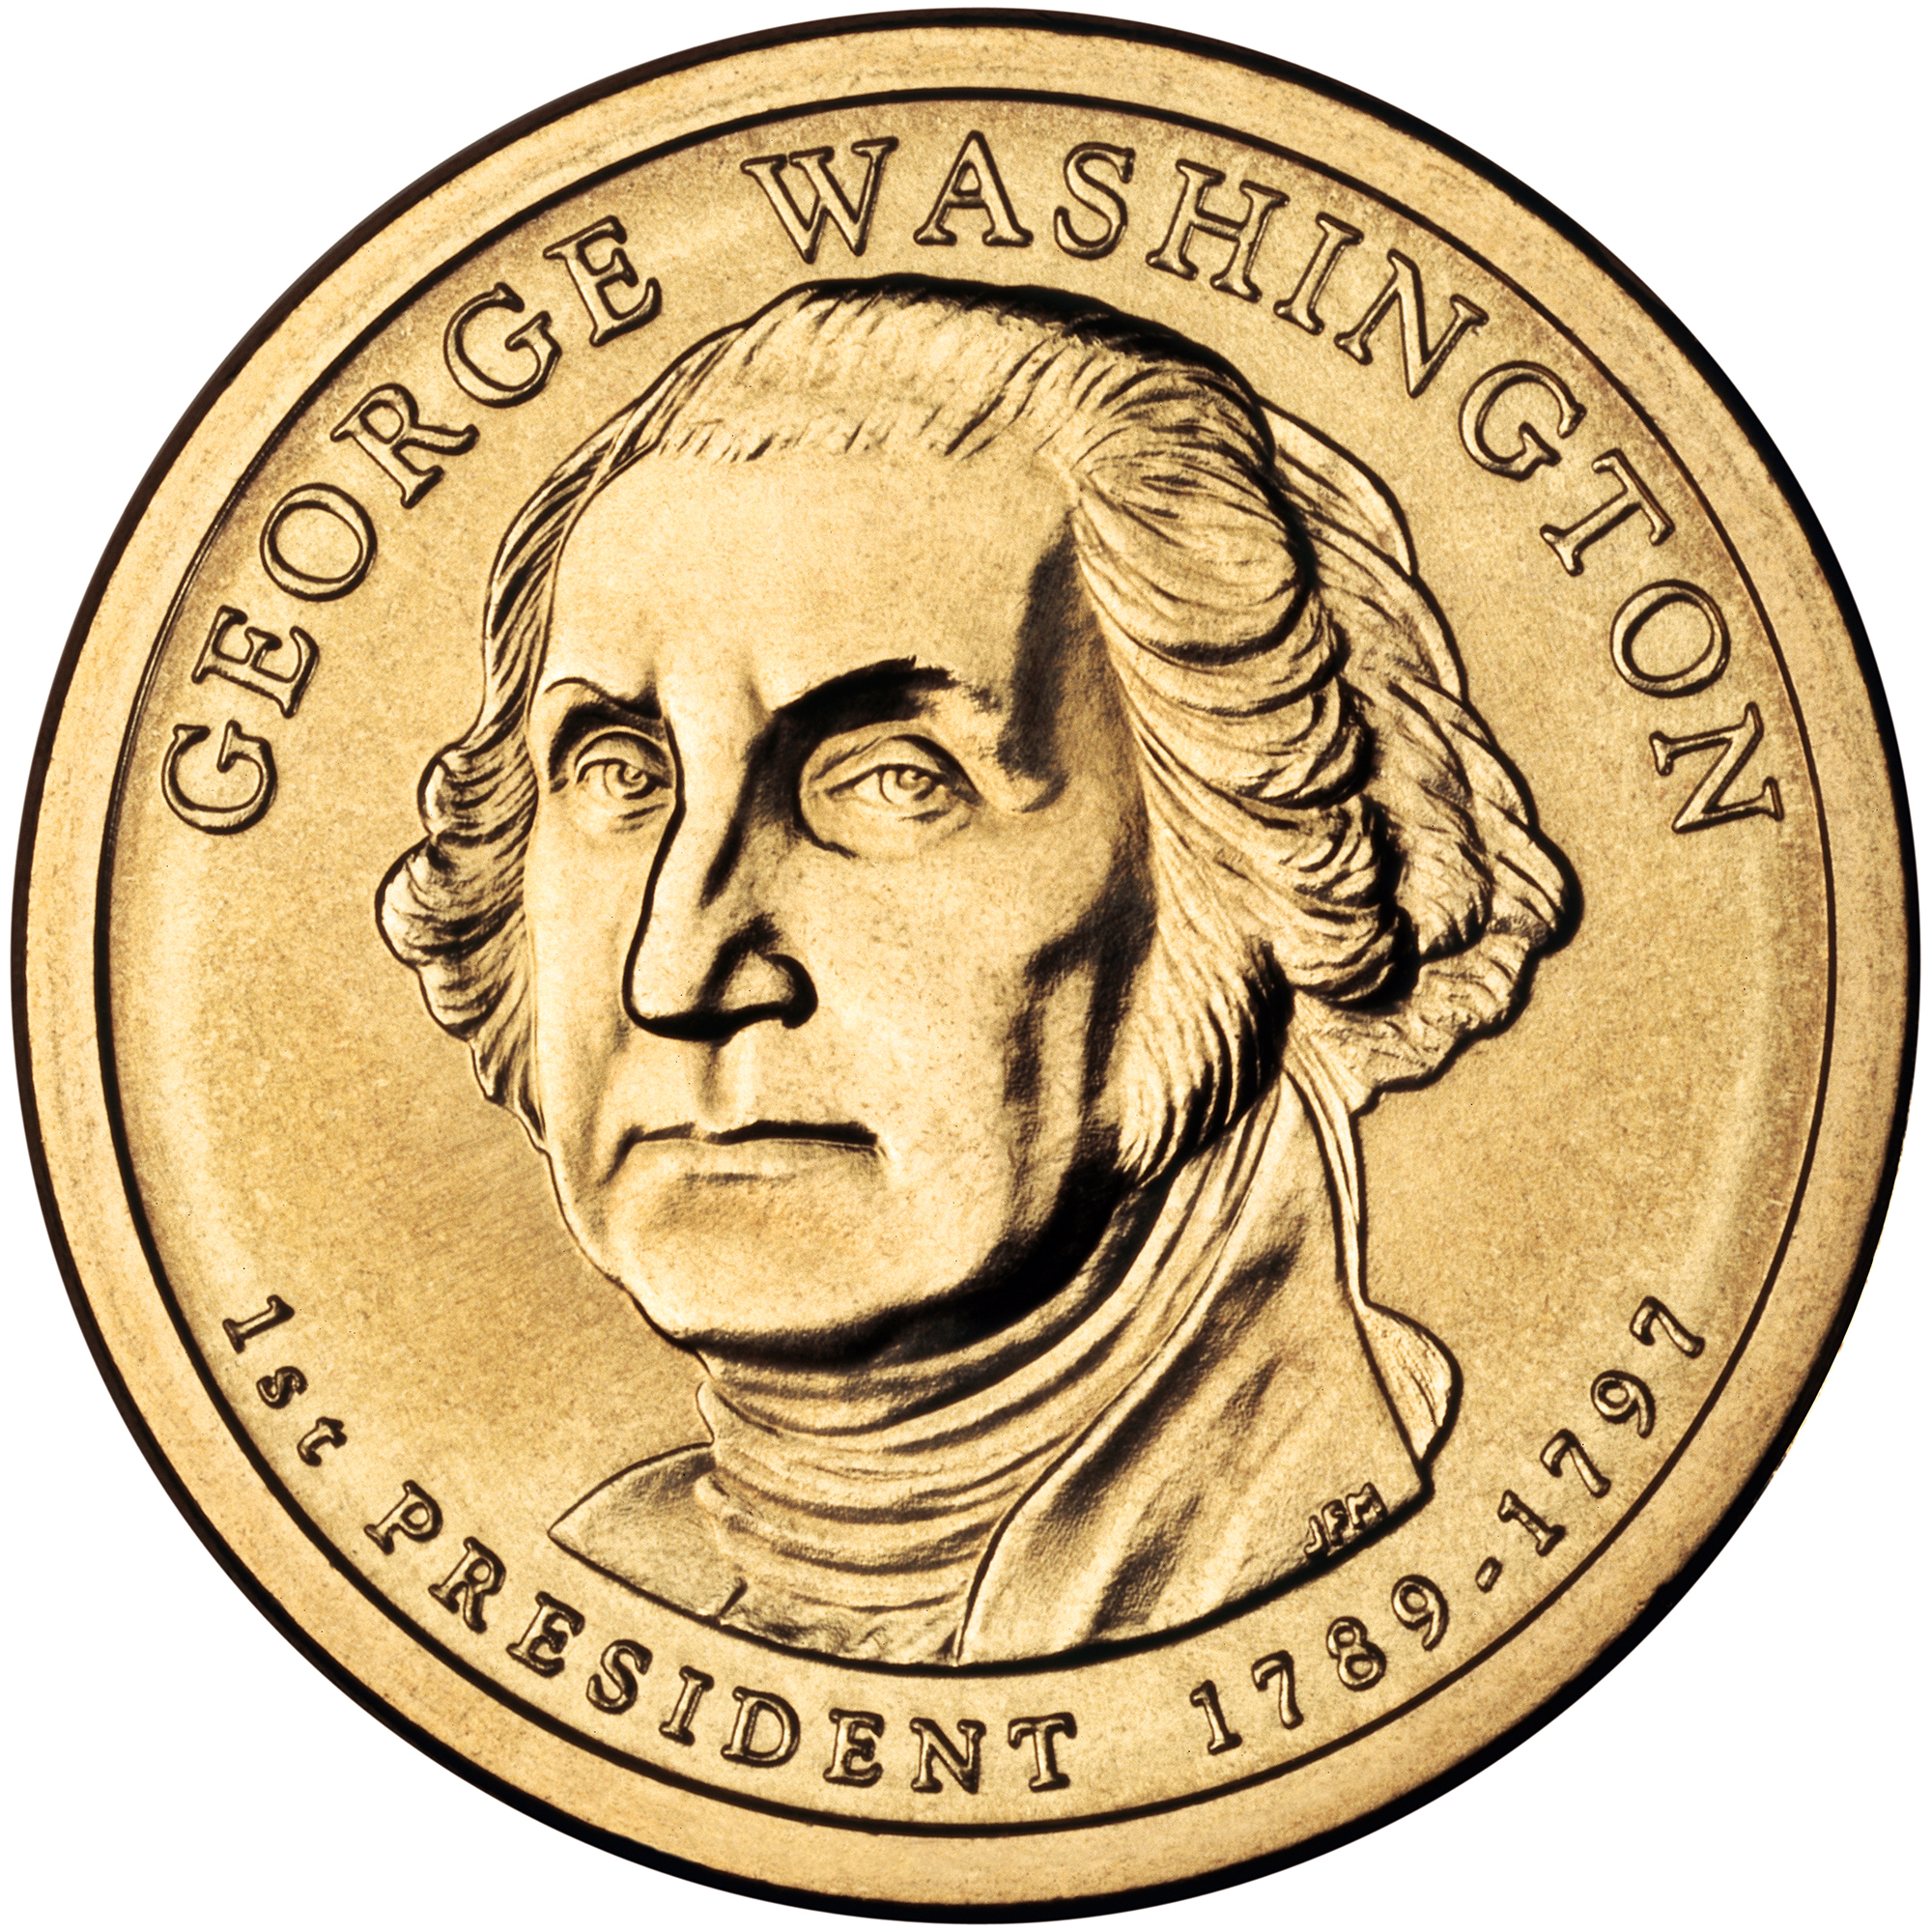 George Washington Presidential $1 Coin